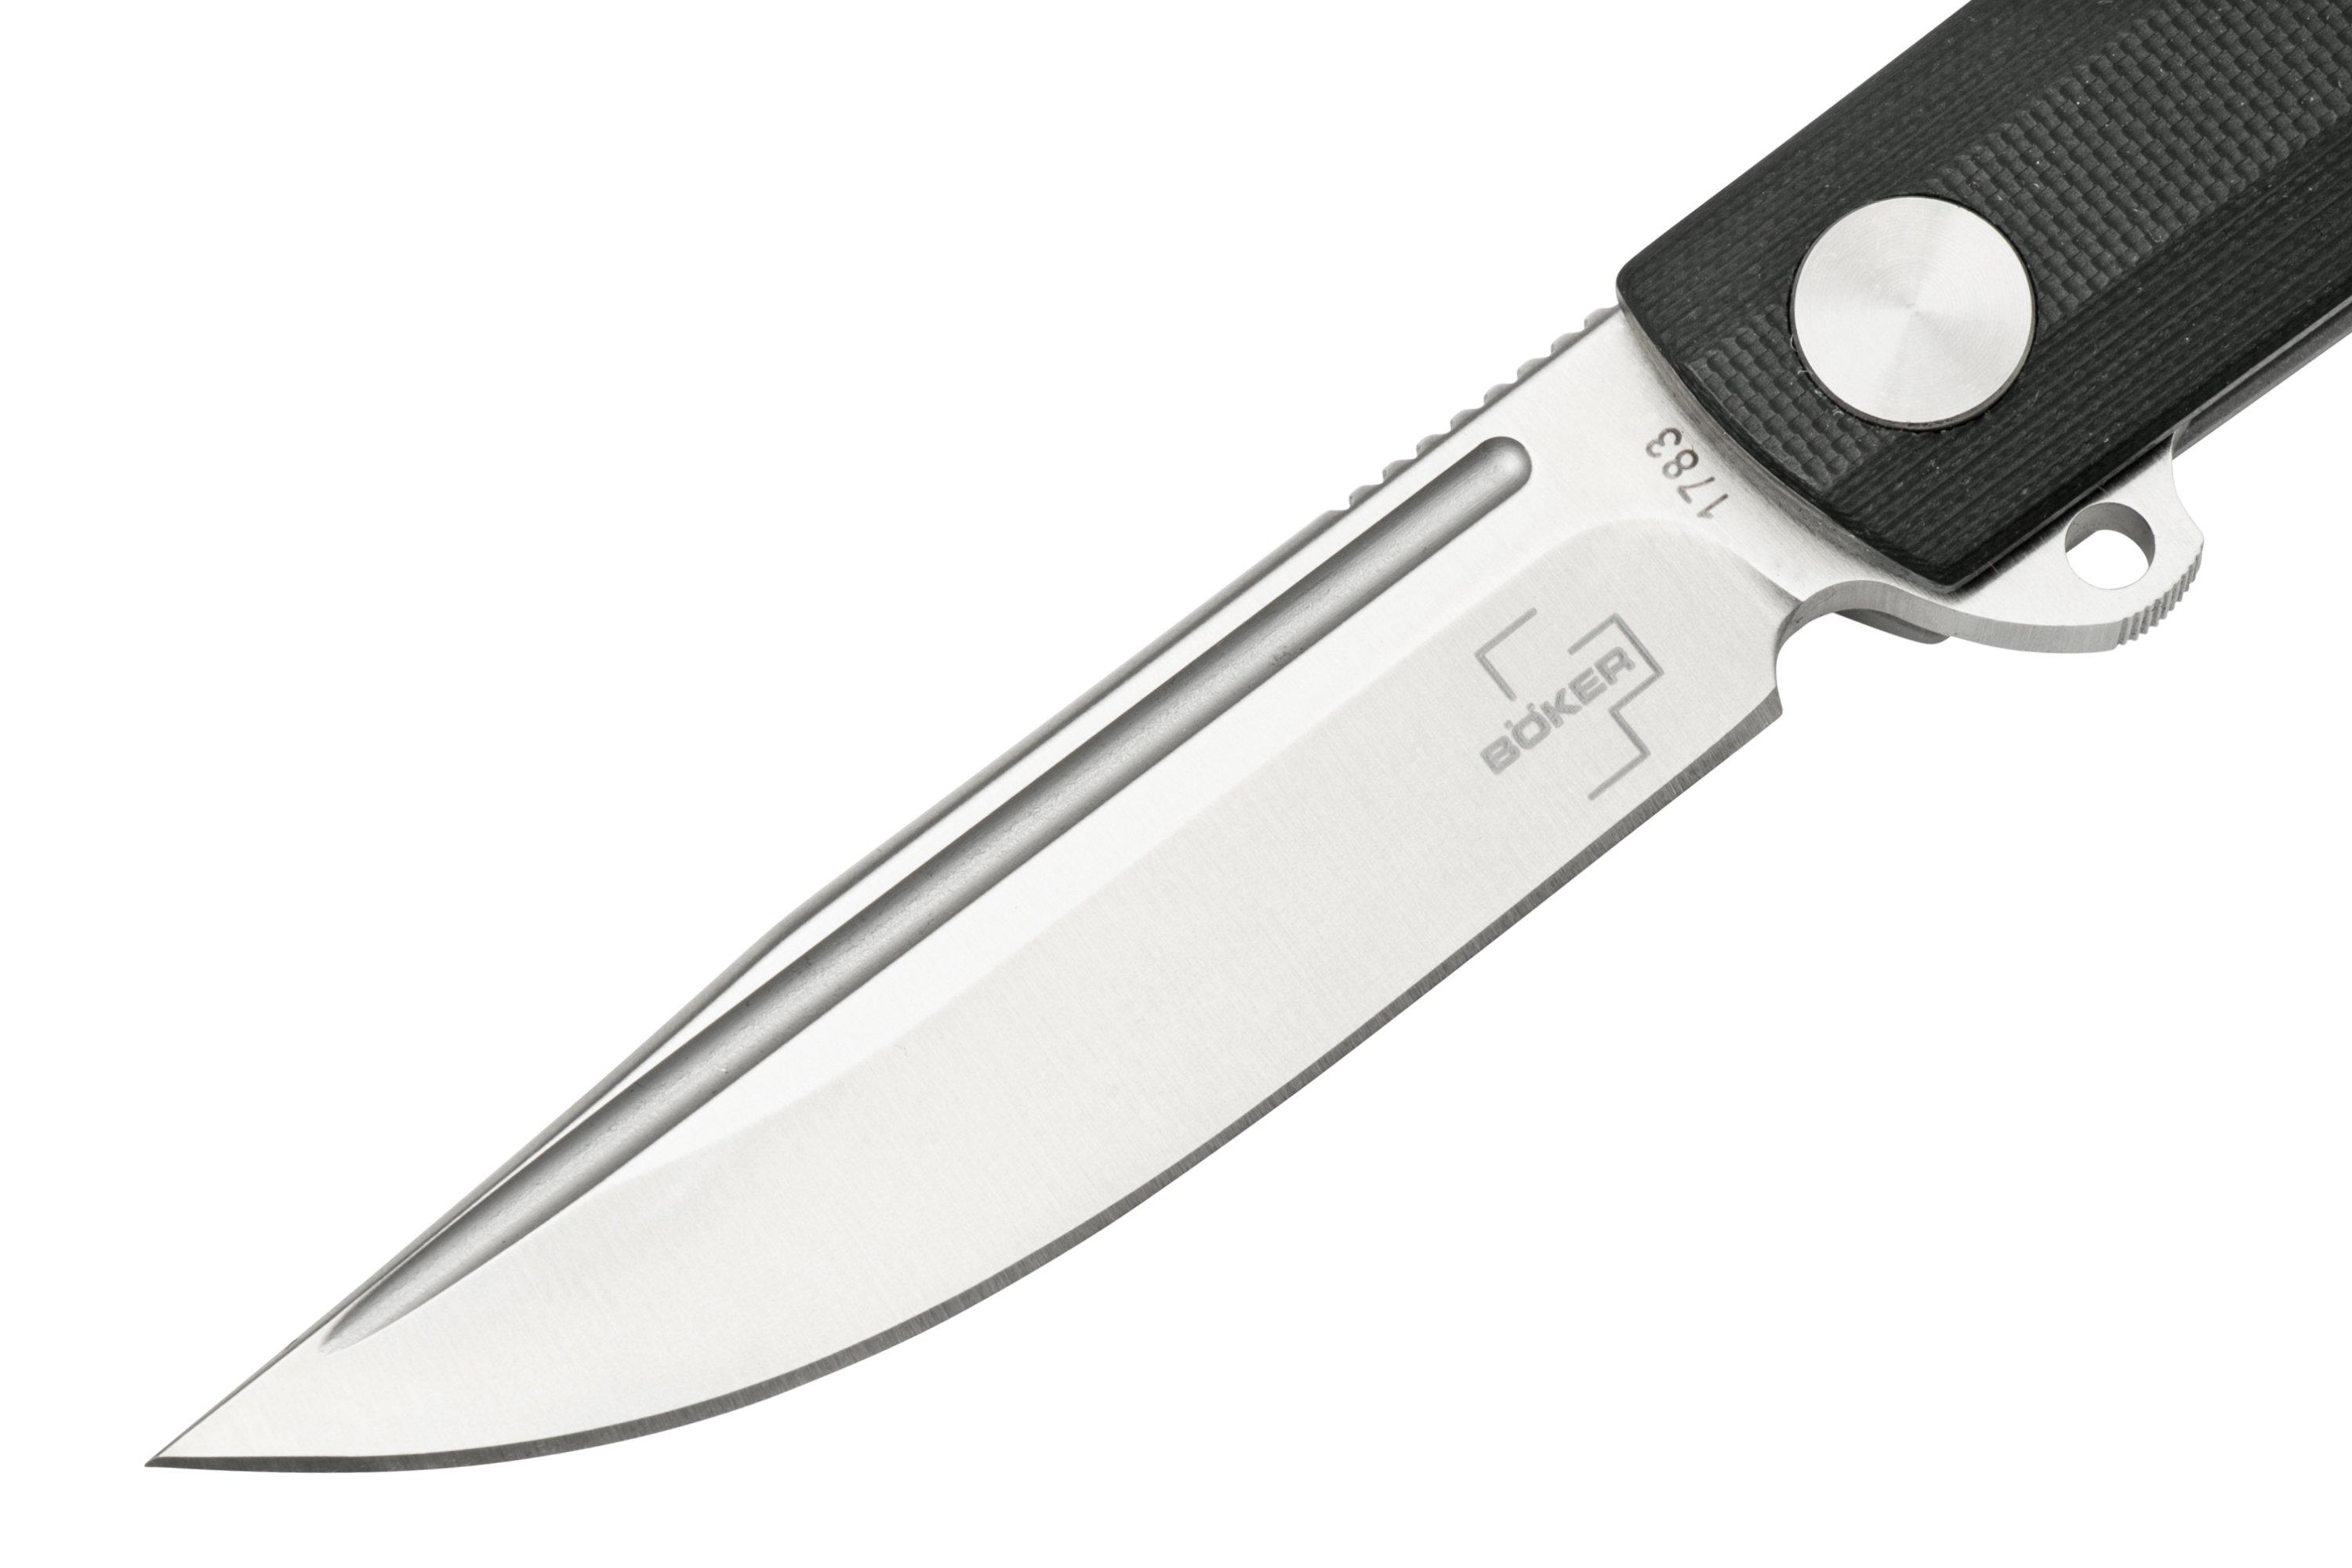 Böker Plus Cataclyst 42 01BO675 pocket knife  Advantageously shopping at